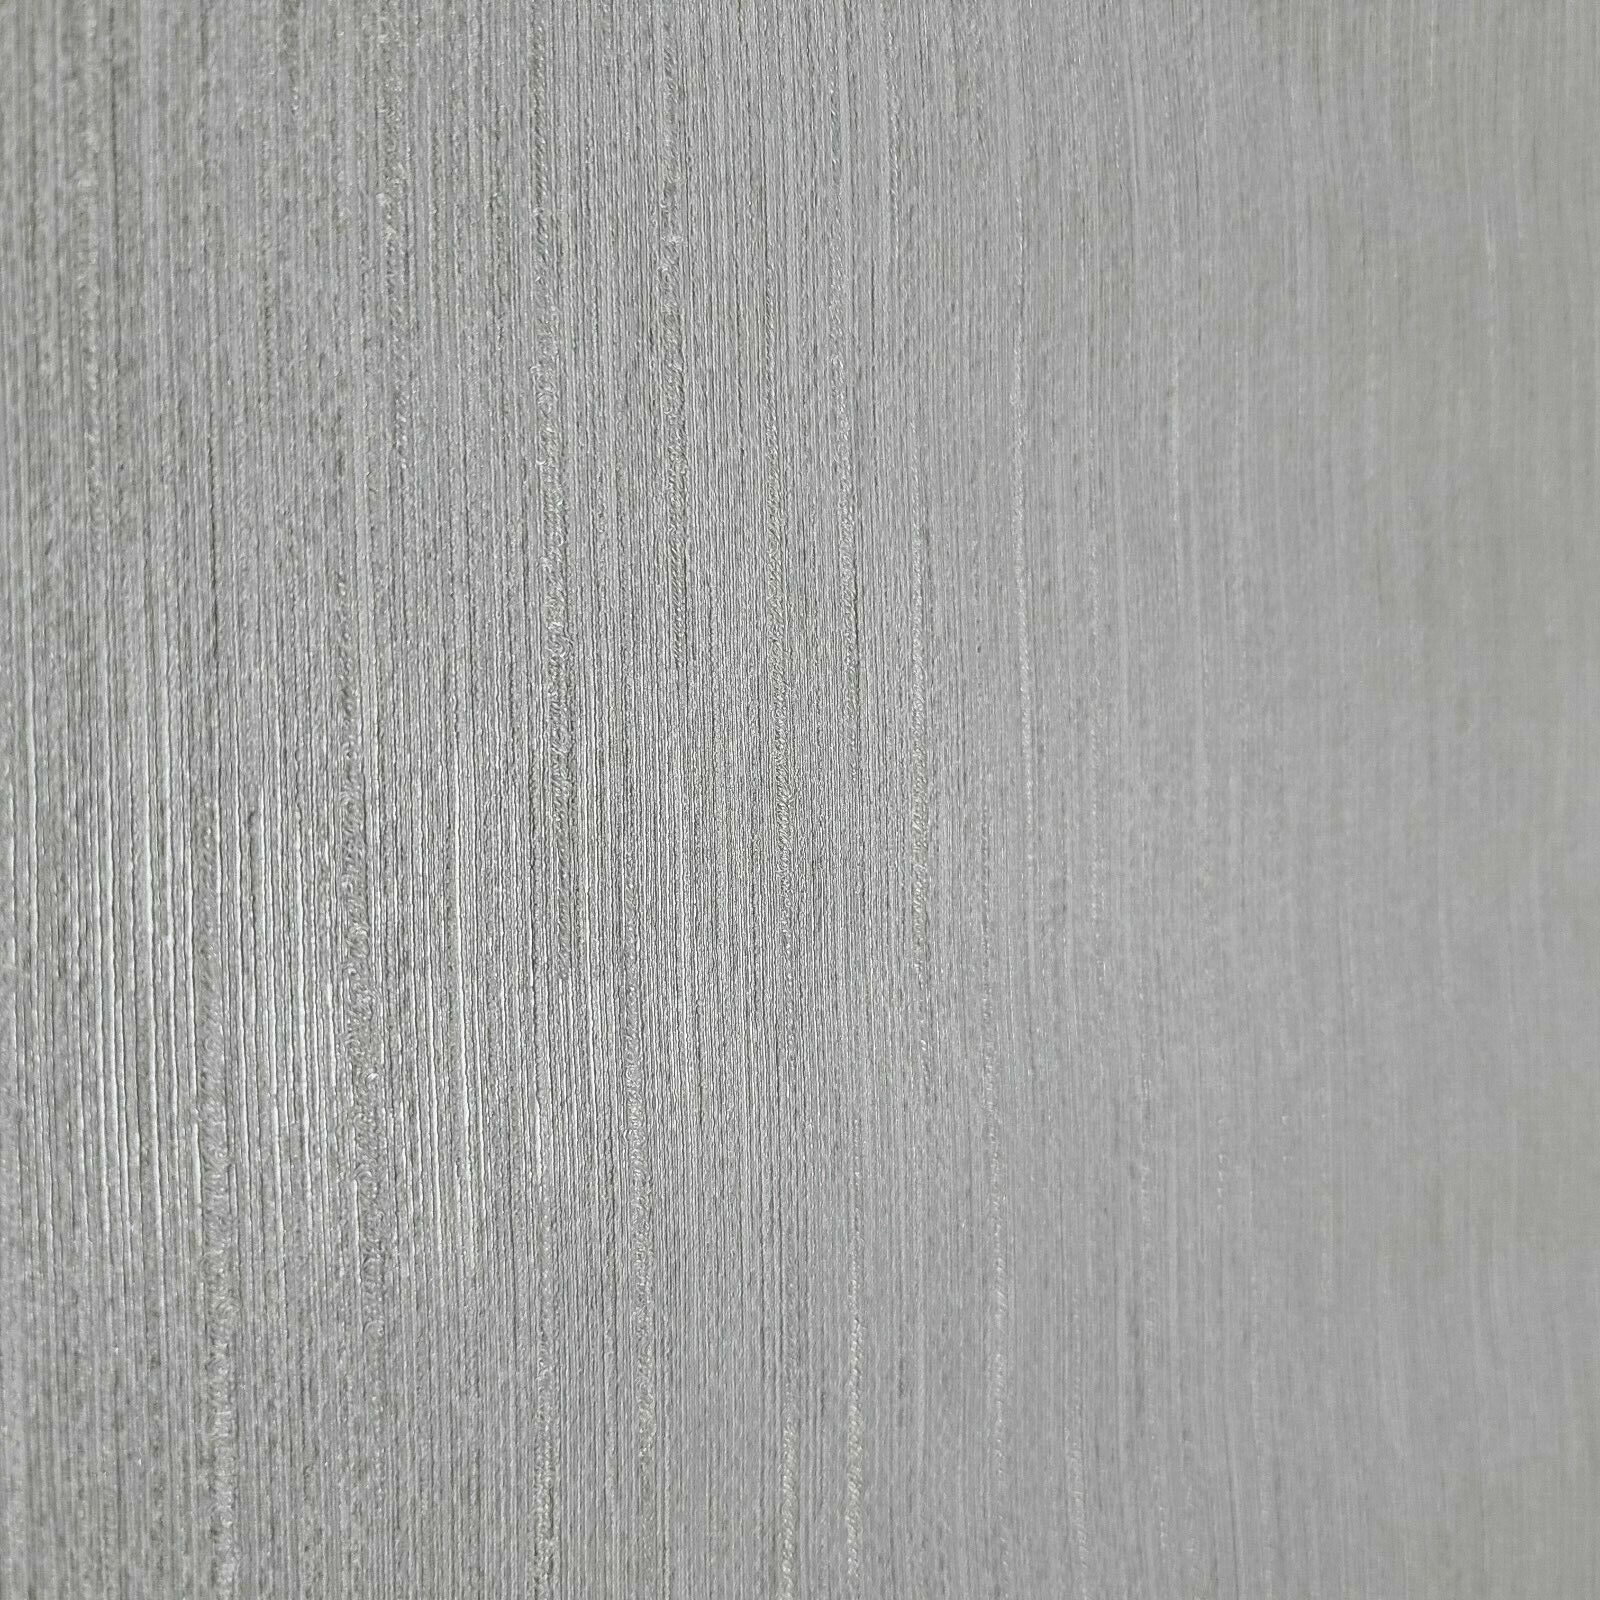 Z72012 Zambaiti Gray silver metallic faux fabric textured stria 